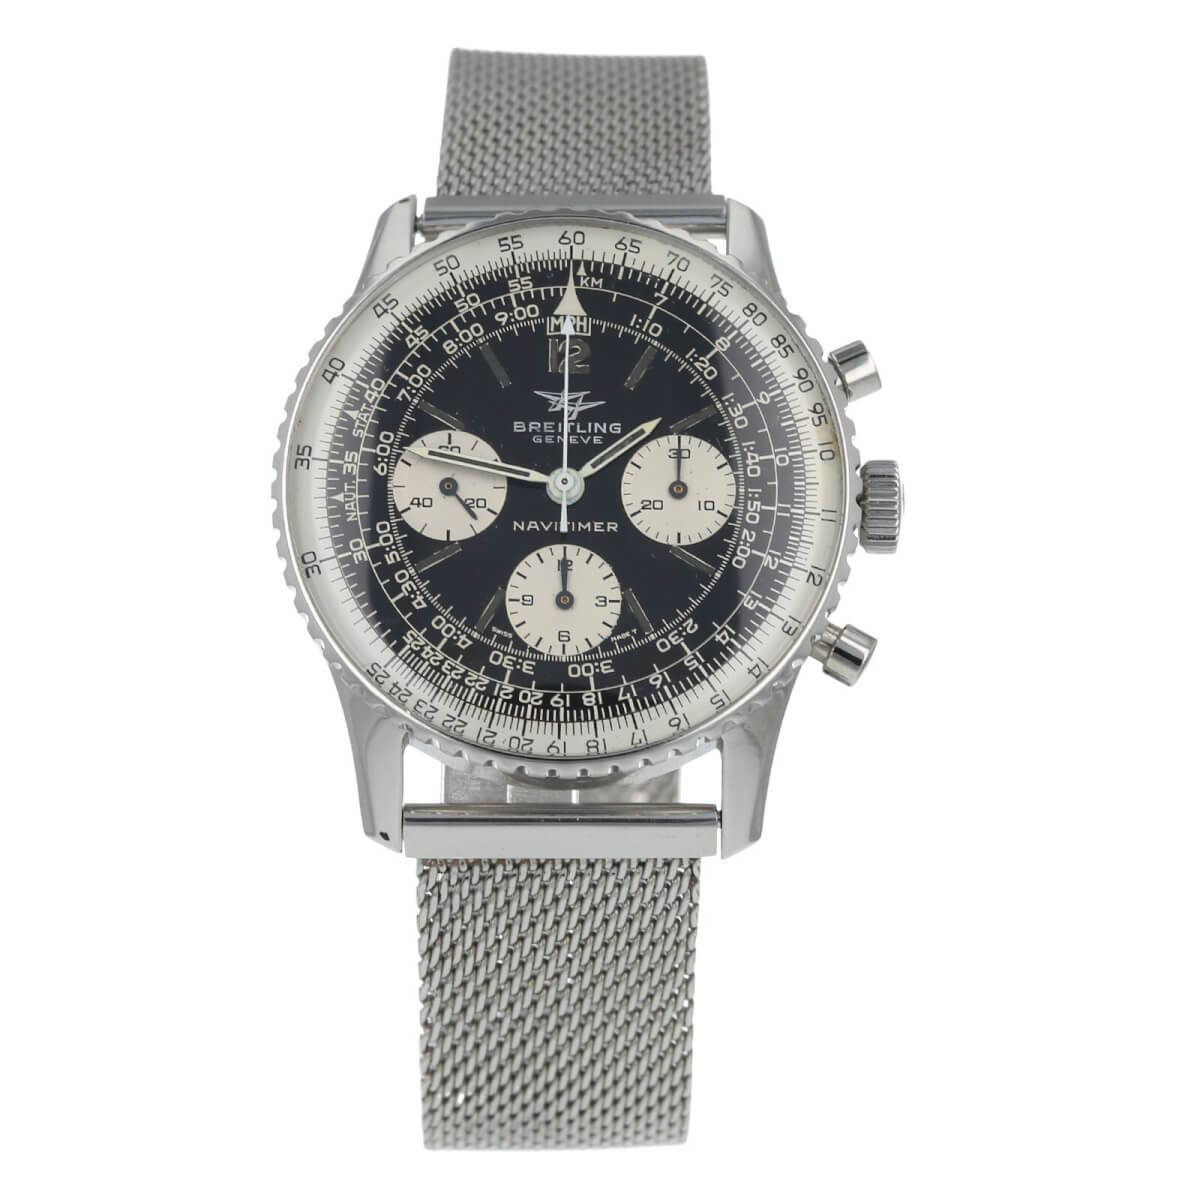 Black dial Breitling navitimer wristwatch